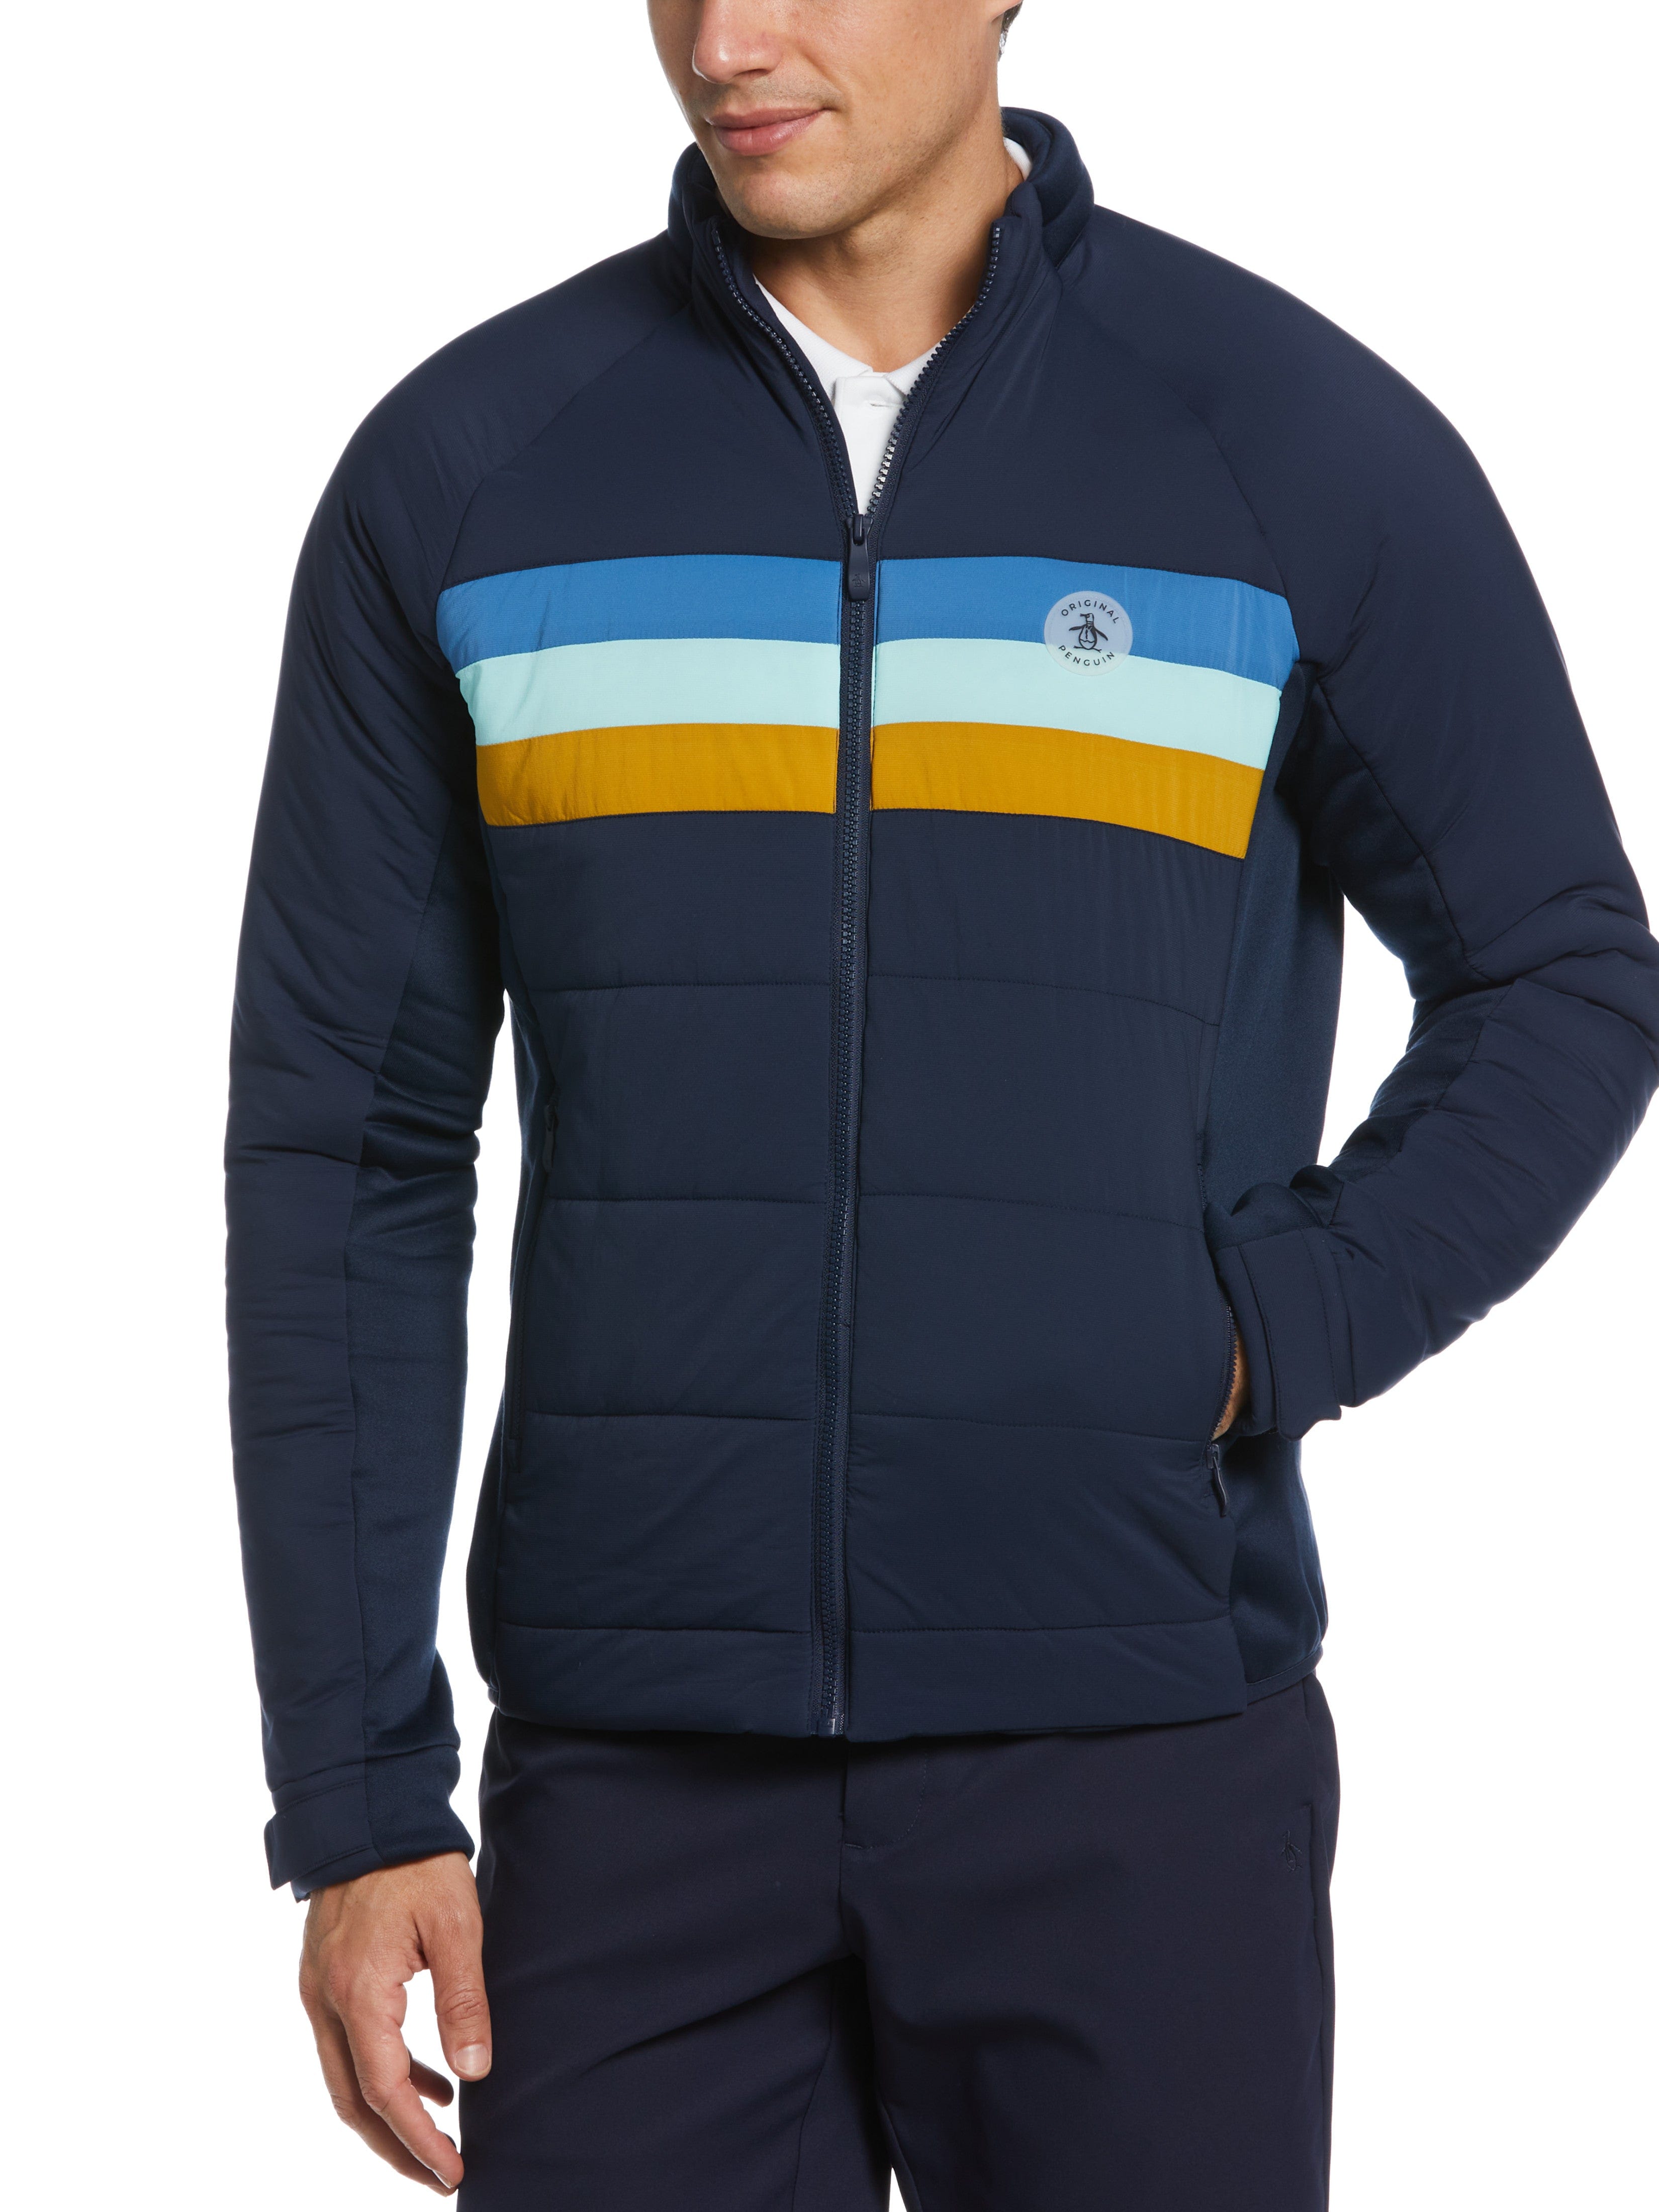 Original Penguin Mens Insulated 70s Golf Jacket Top, Size XL, Dark Navy Blue, 100% Nylon | Golf Apparel Shop